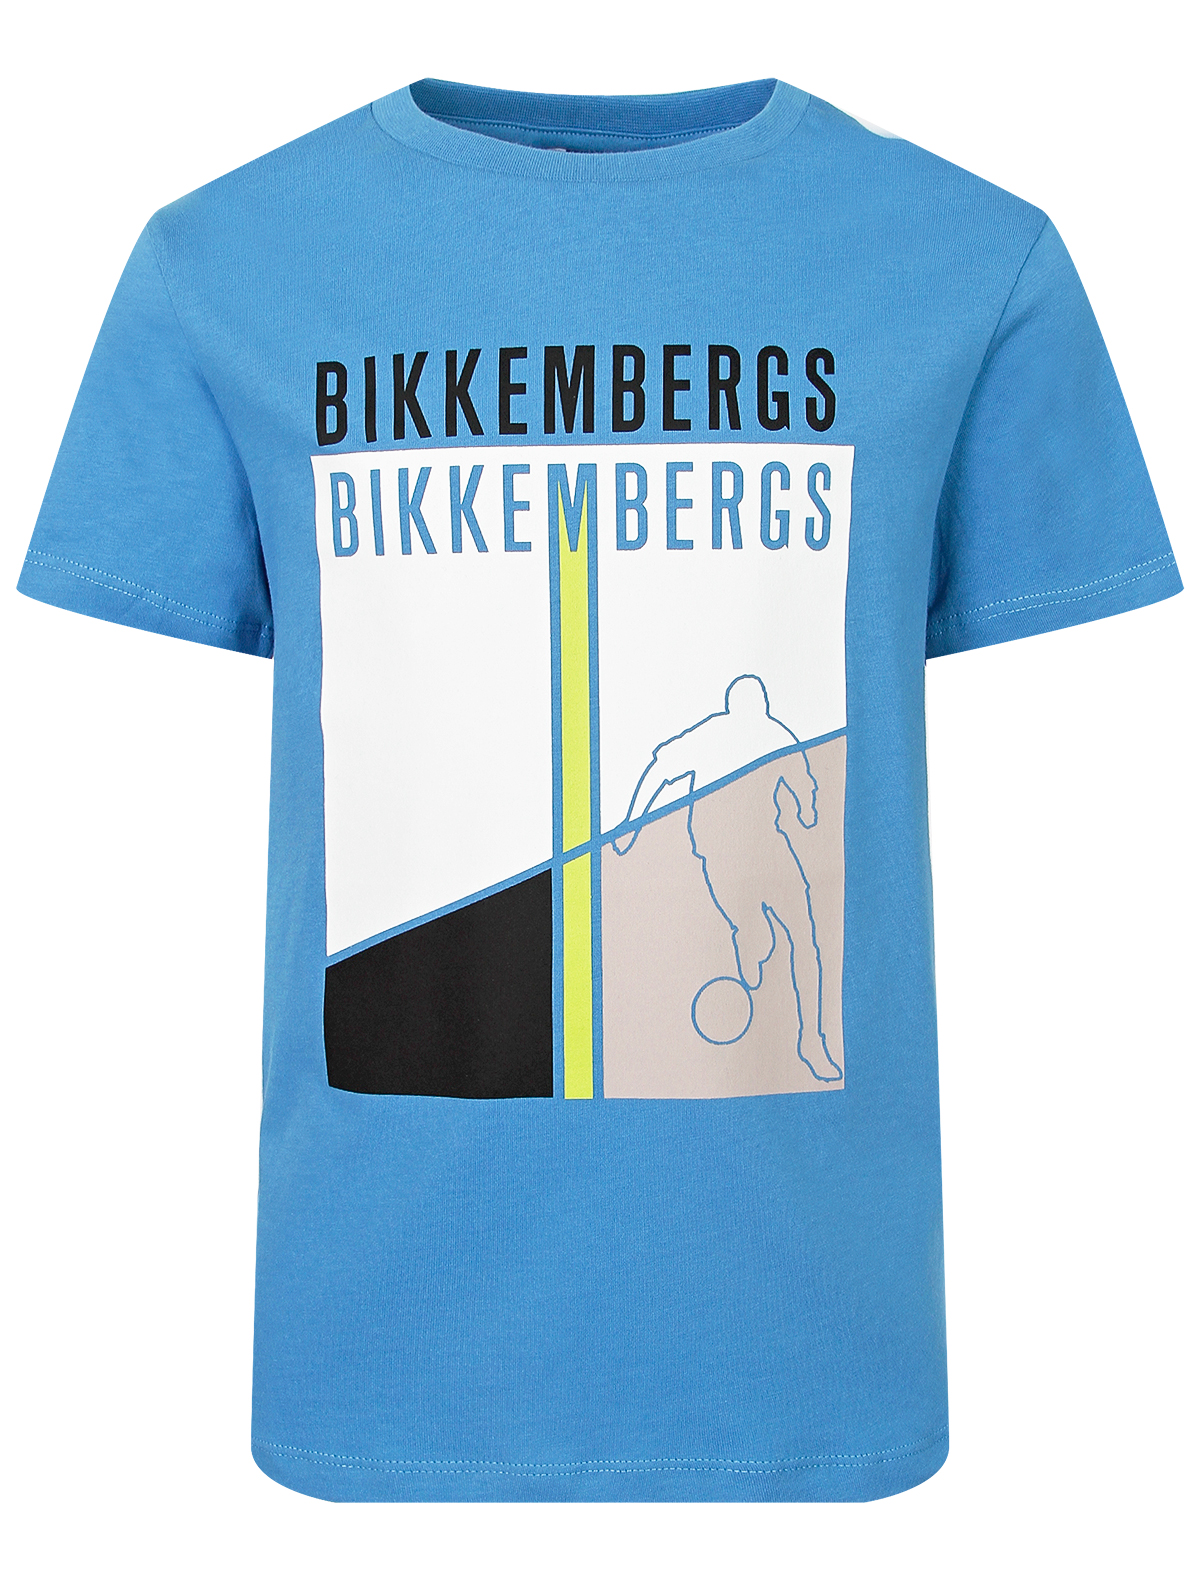 Футболка Bikkembergs 2663243, цвет голубой, размер 9